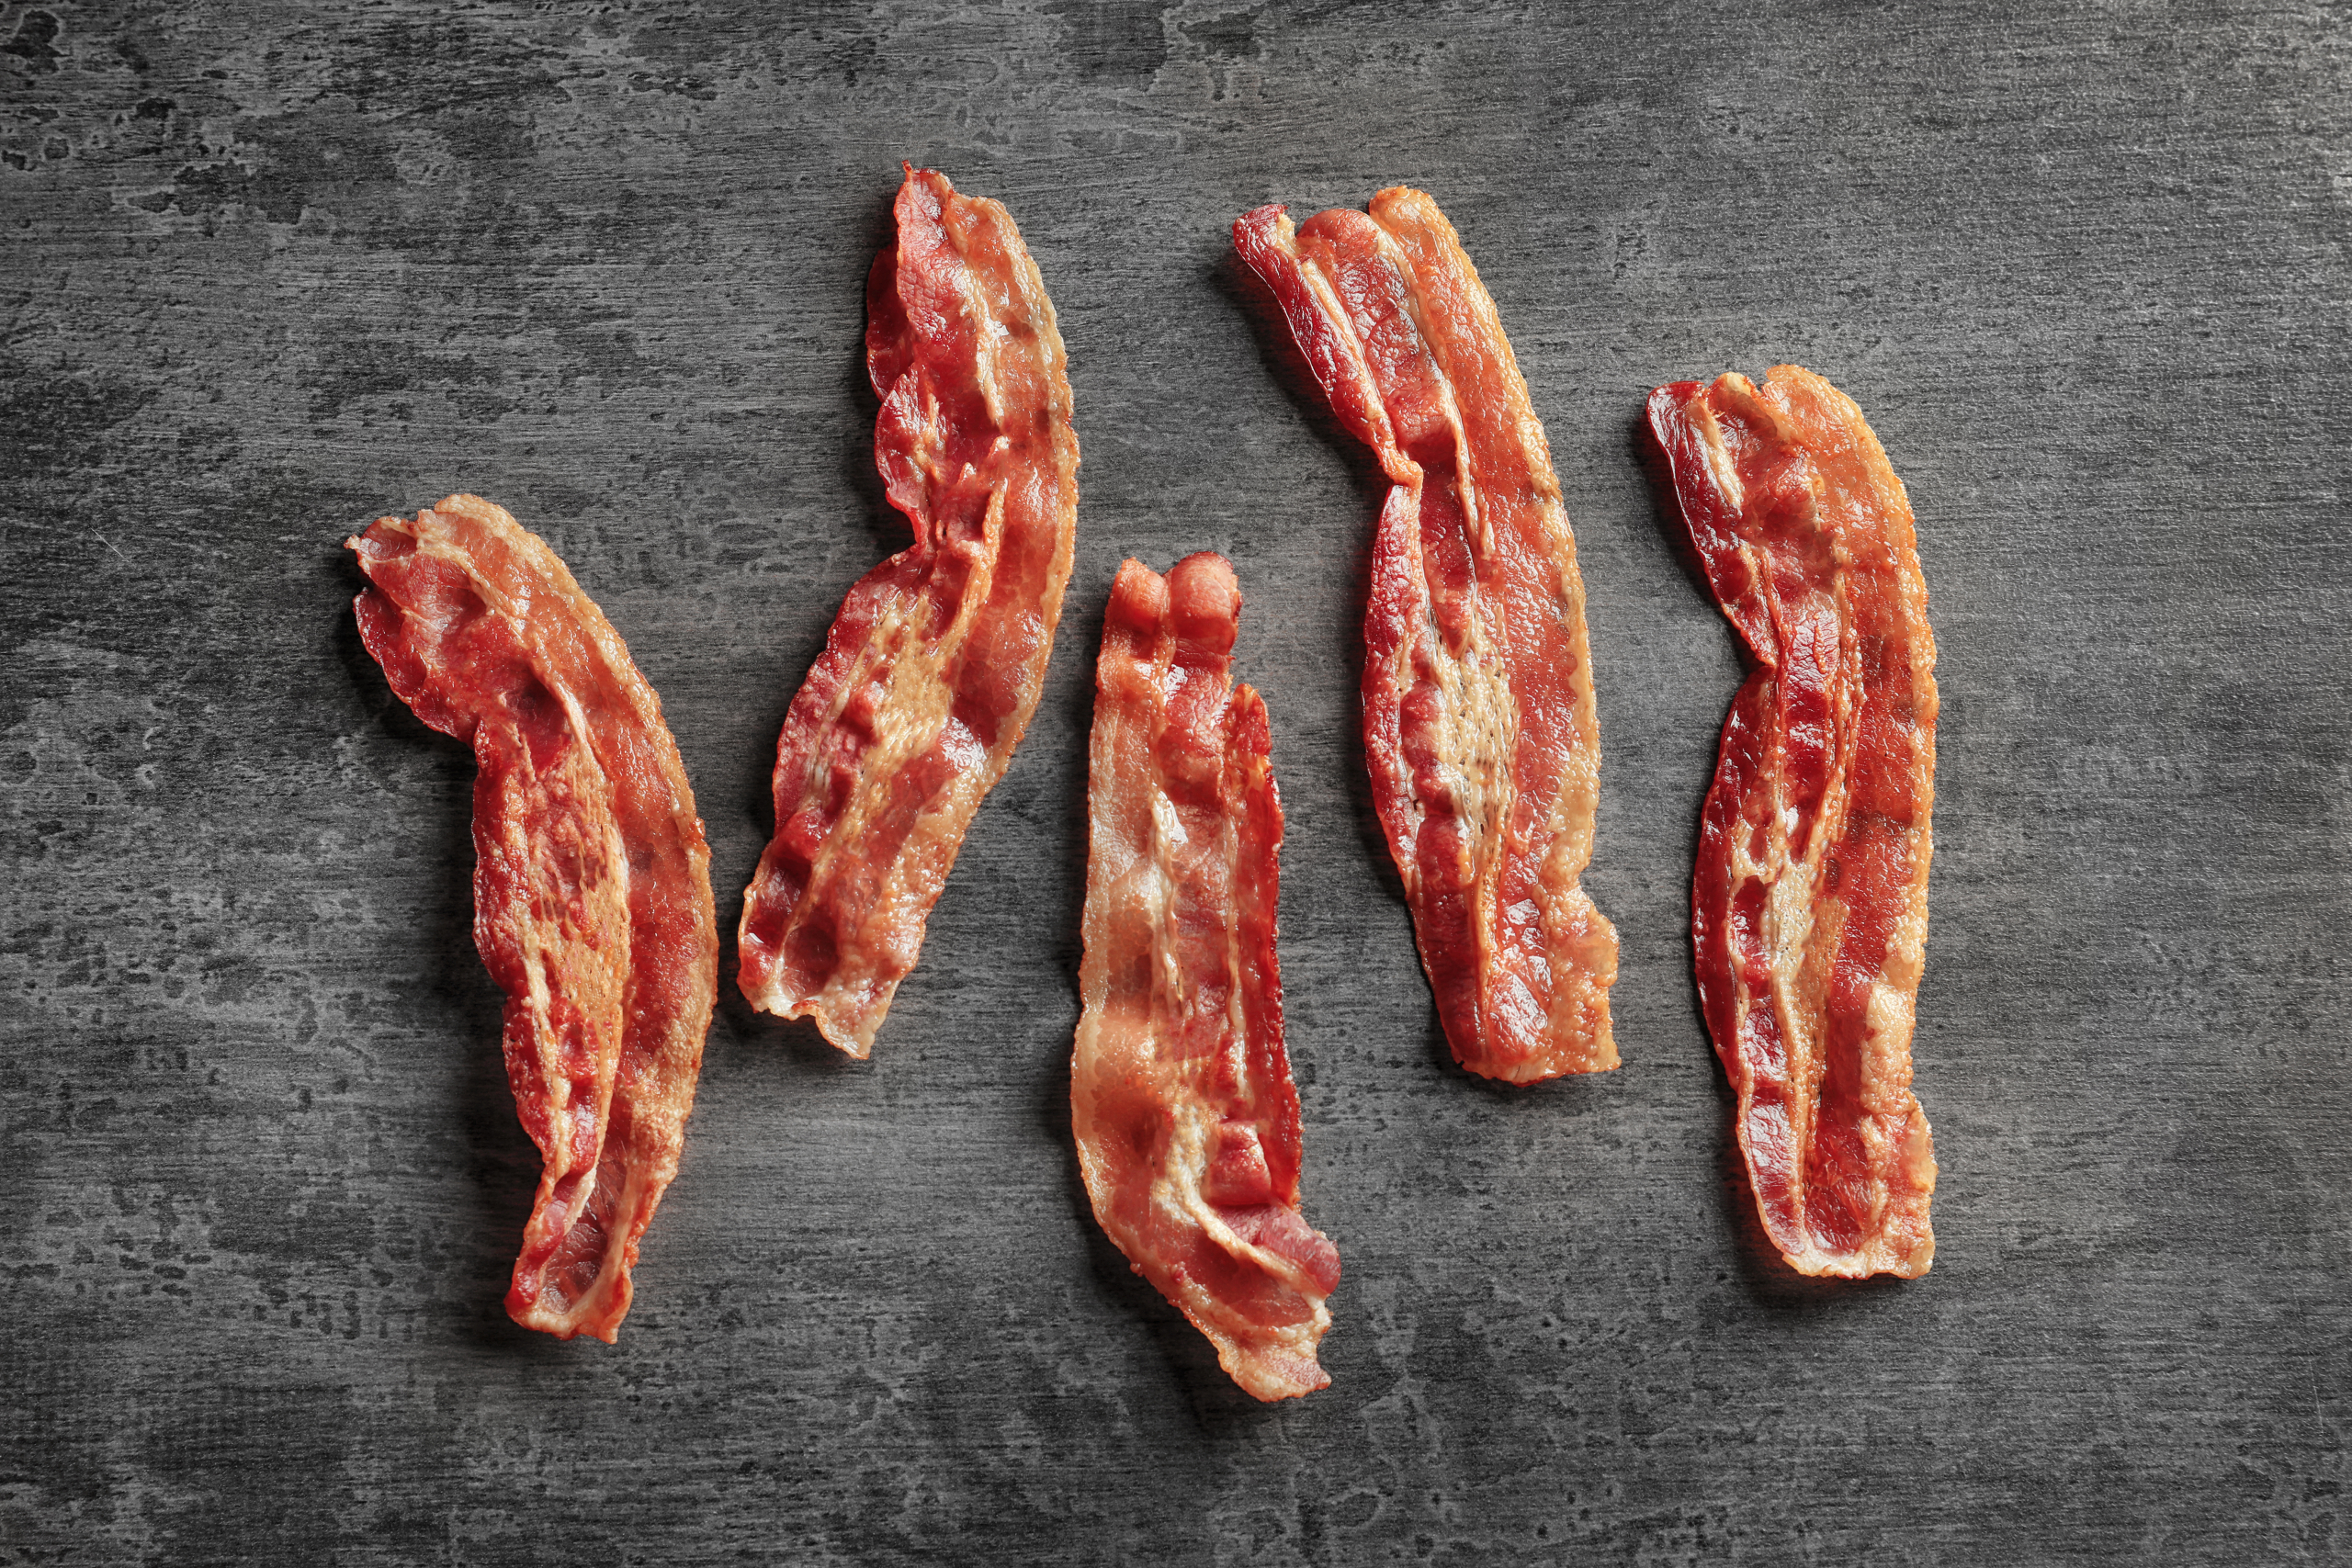 Making Bacon GFX for bacons ;) (screenshot the bacon) 